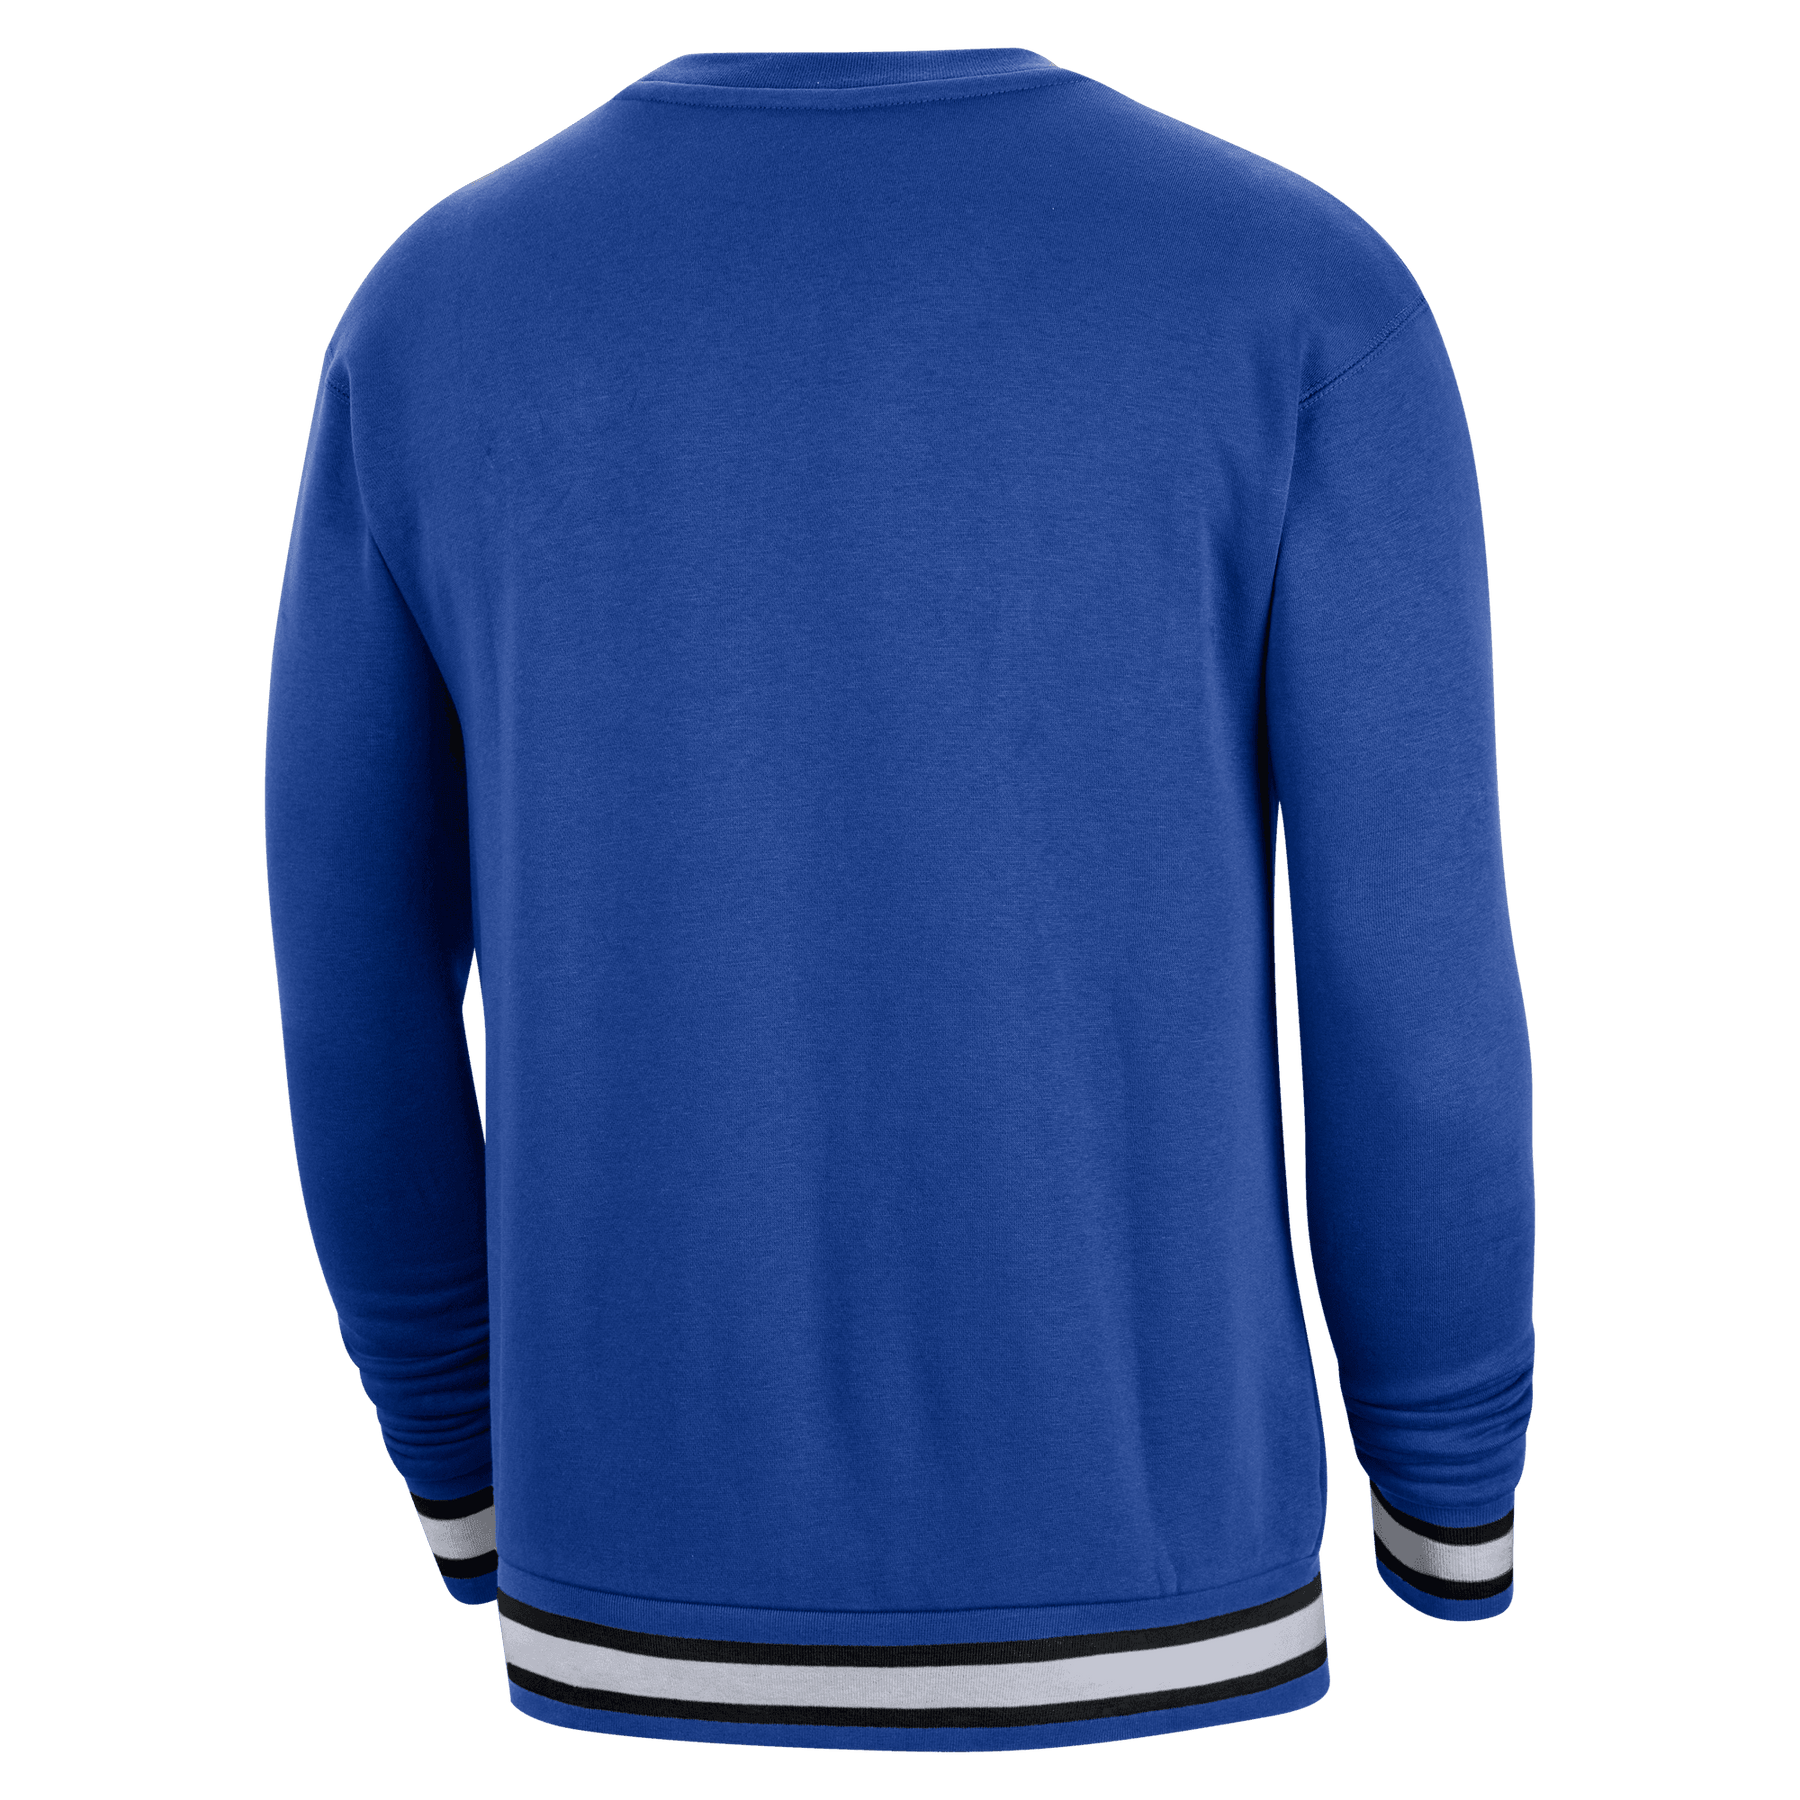 Dallas Mavericks Crewneck Sweatshirts for Sale